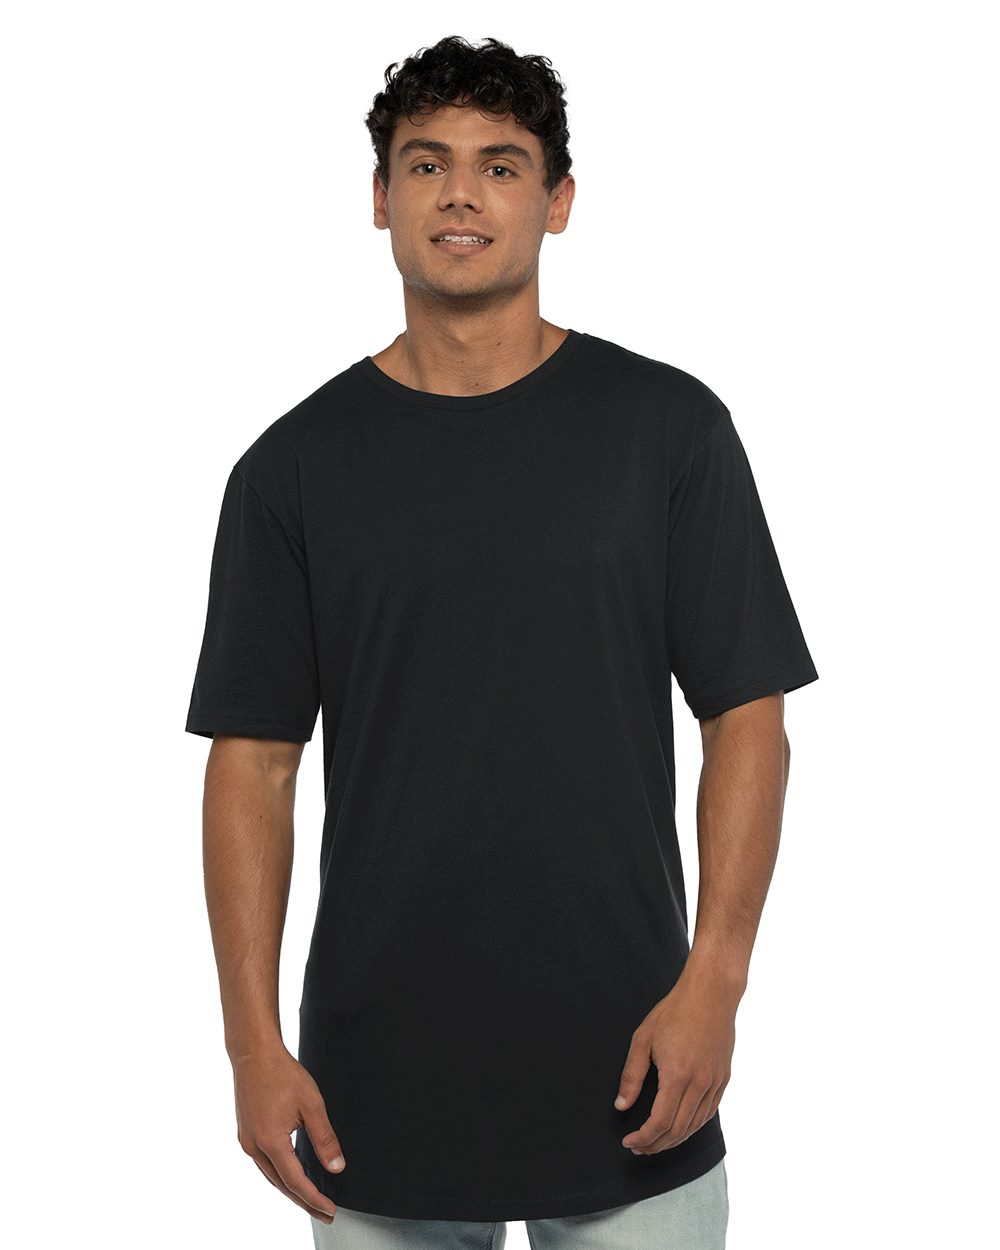 Next Level 3602 - Unisex Cotton Long Body T-Shirt